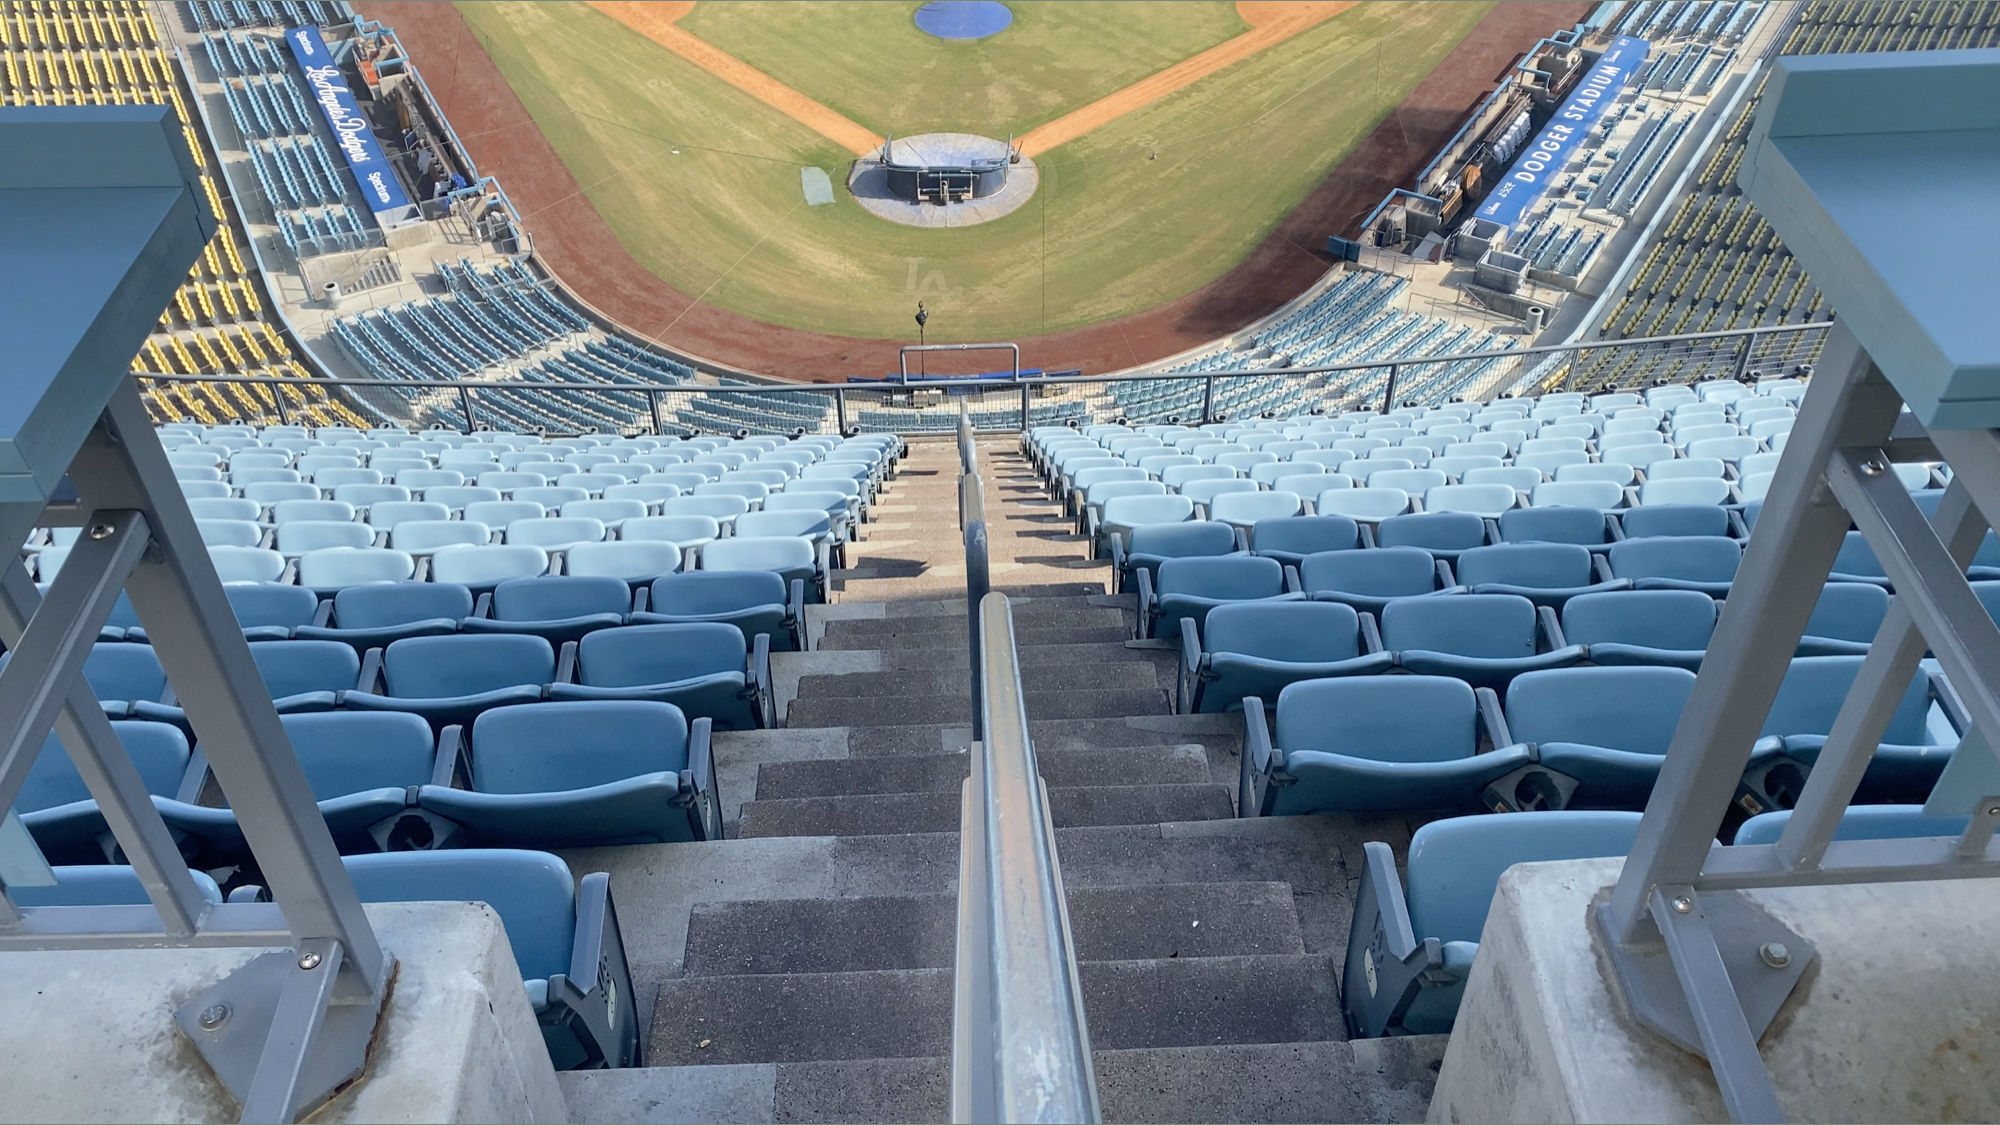 Dodger Stadium View from Top Deck